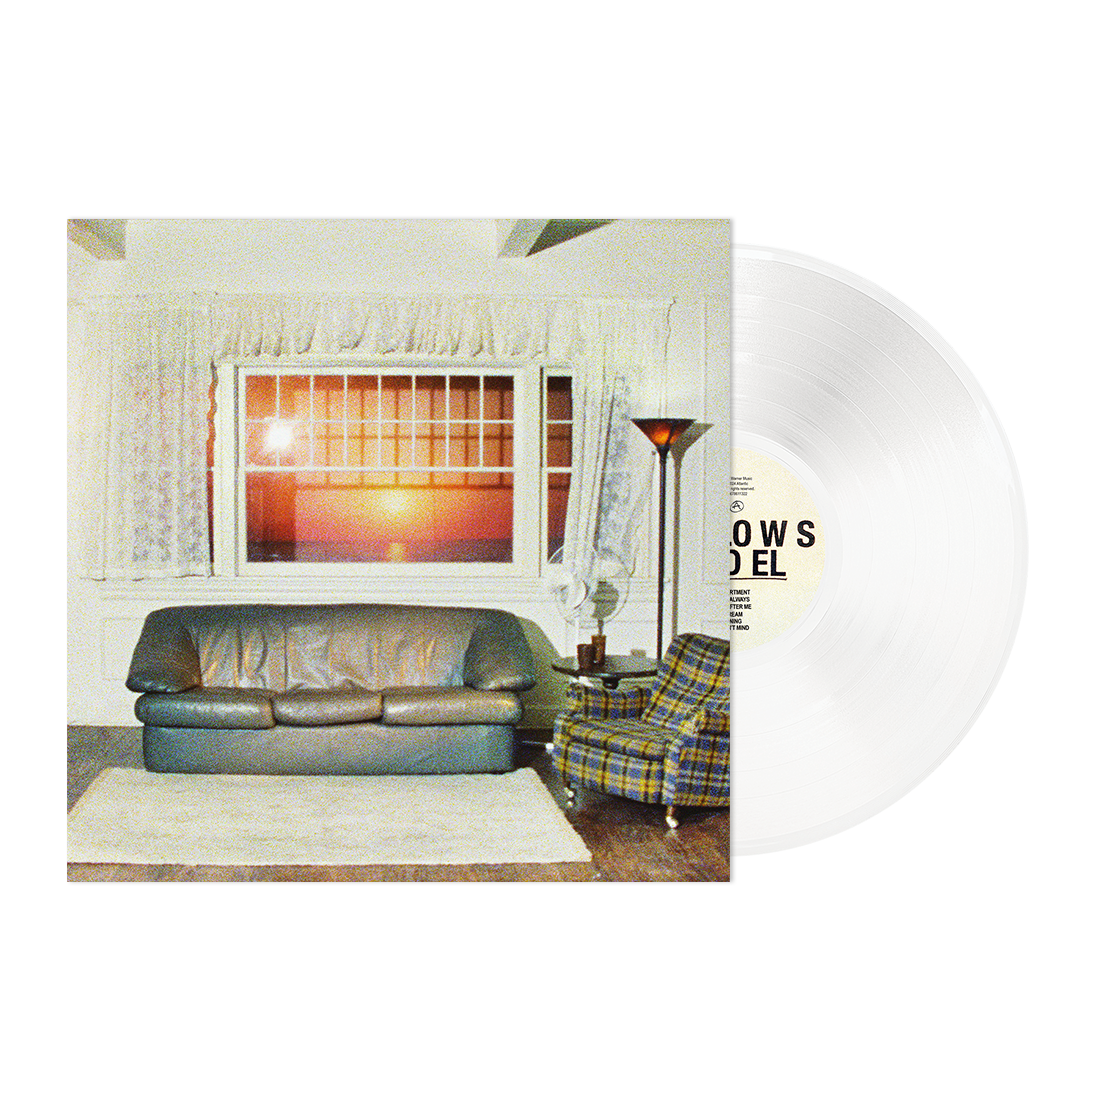 Wallows - Model: Clear Vinyl LP